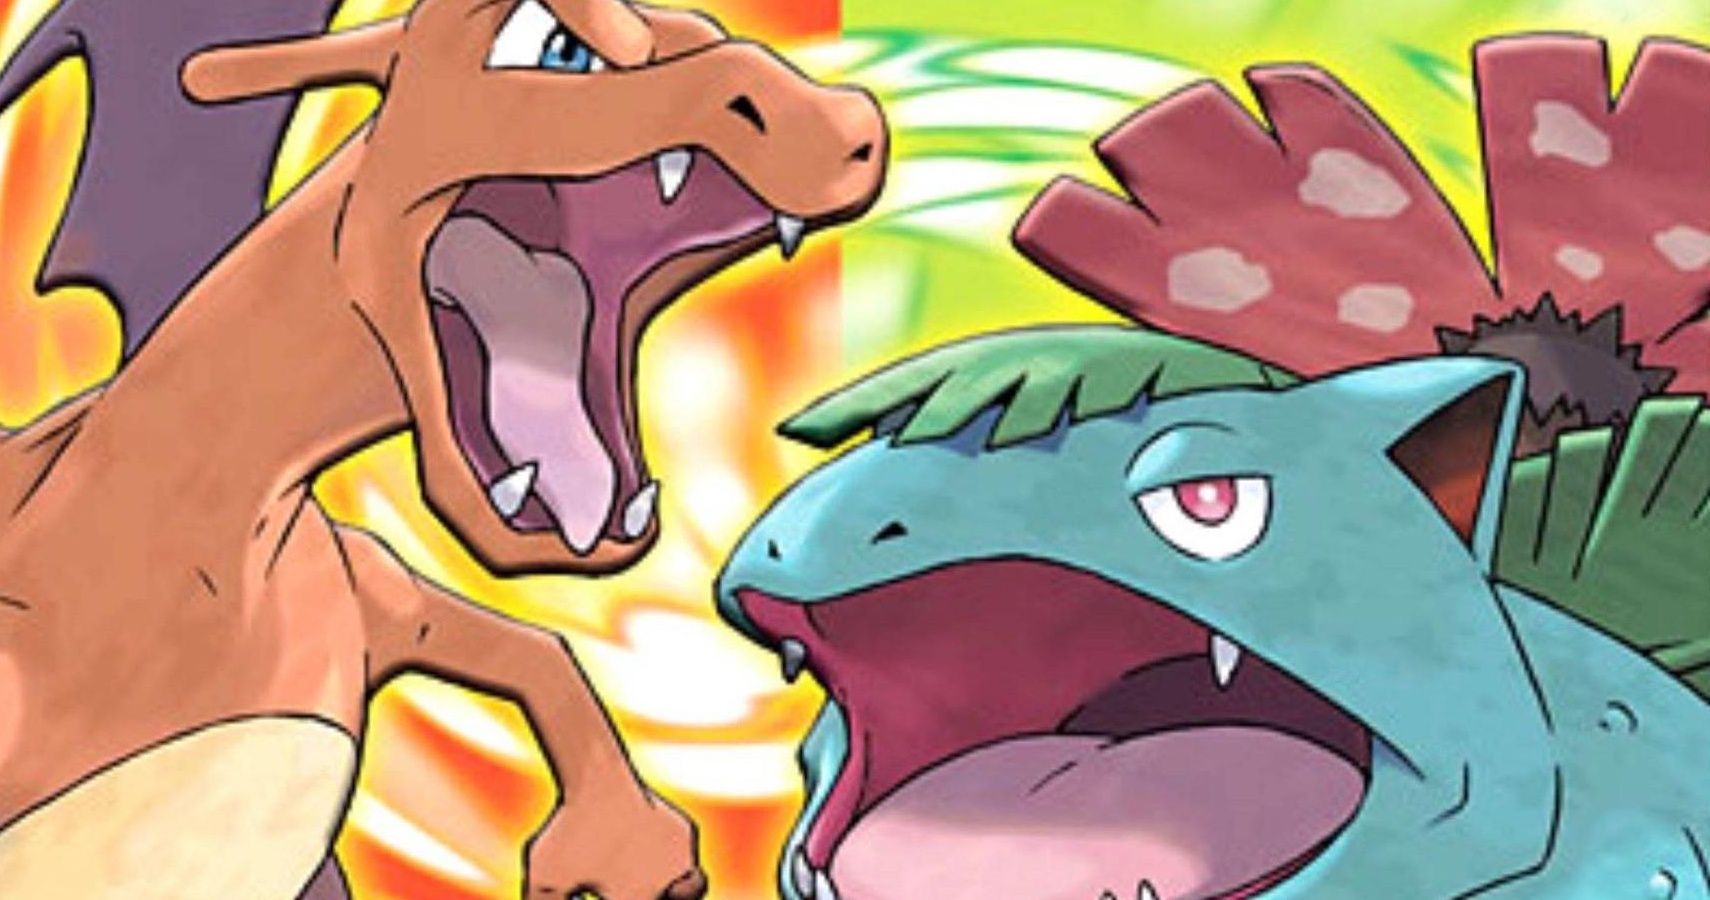 Pokémon FireRed and LeafGreen, Nintendo